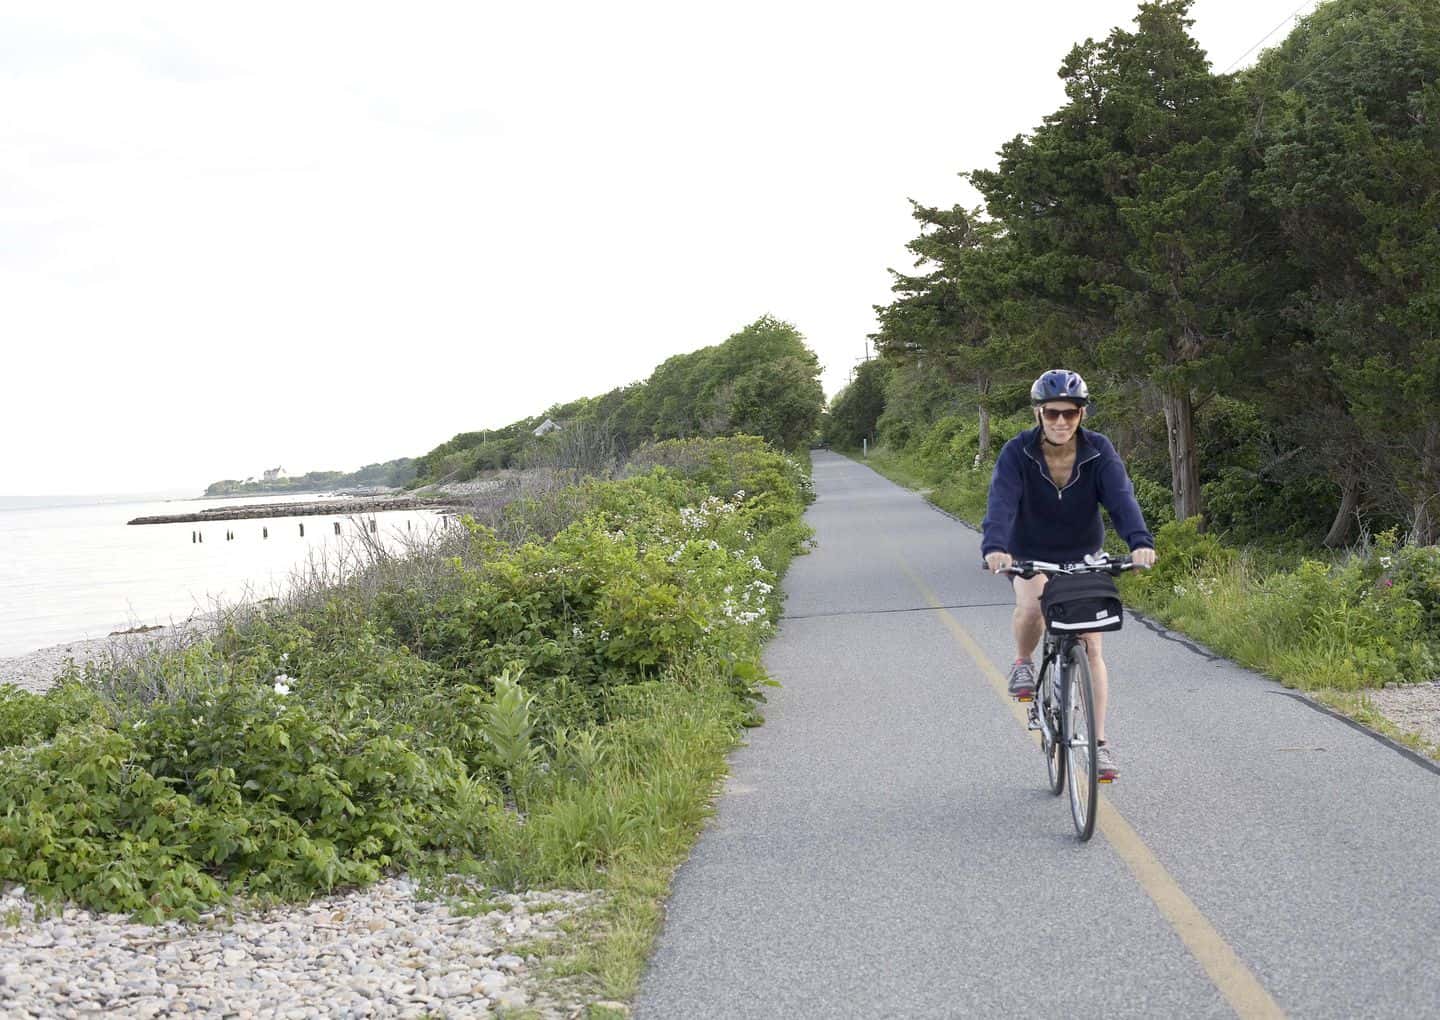 Fall Rides on the Cape Cod Bike Trail - Shining Sea Bikeway Cape CoD